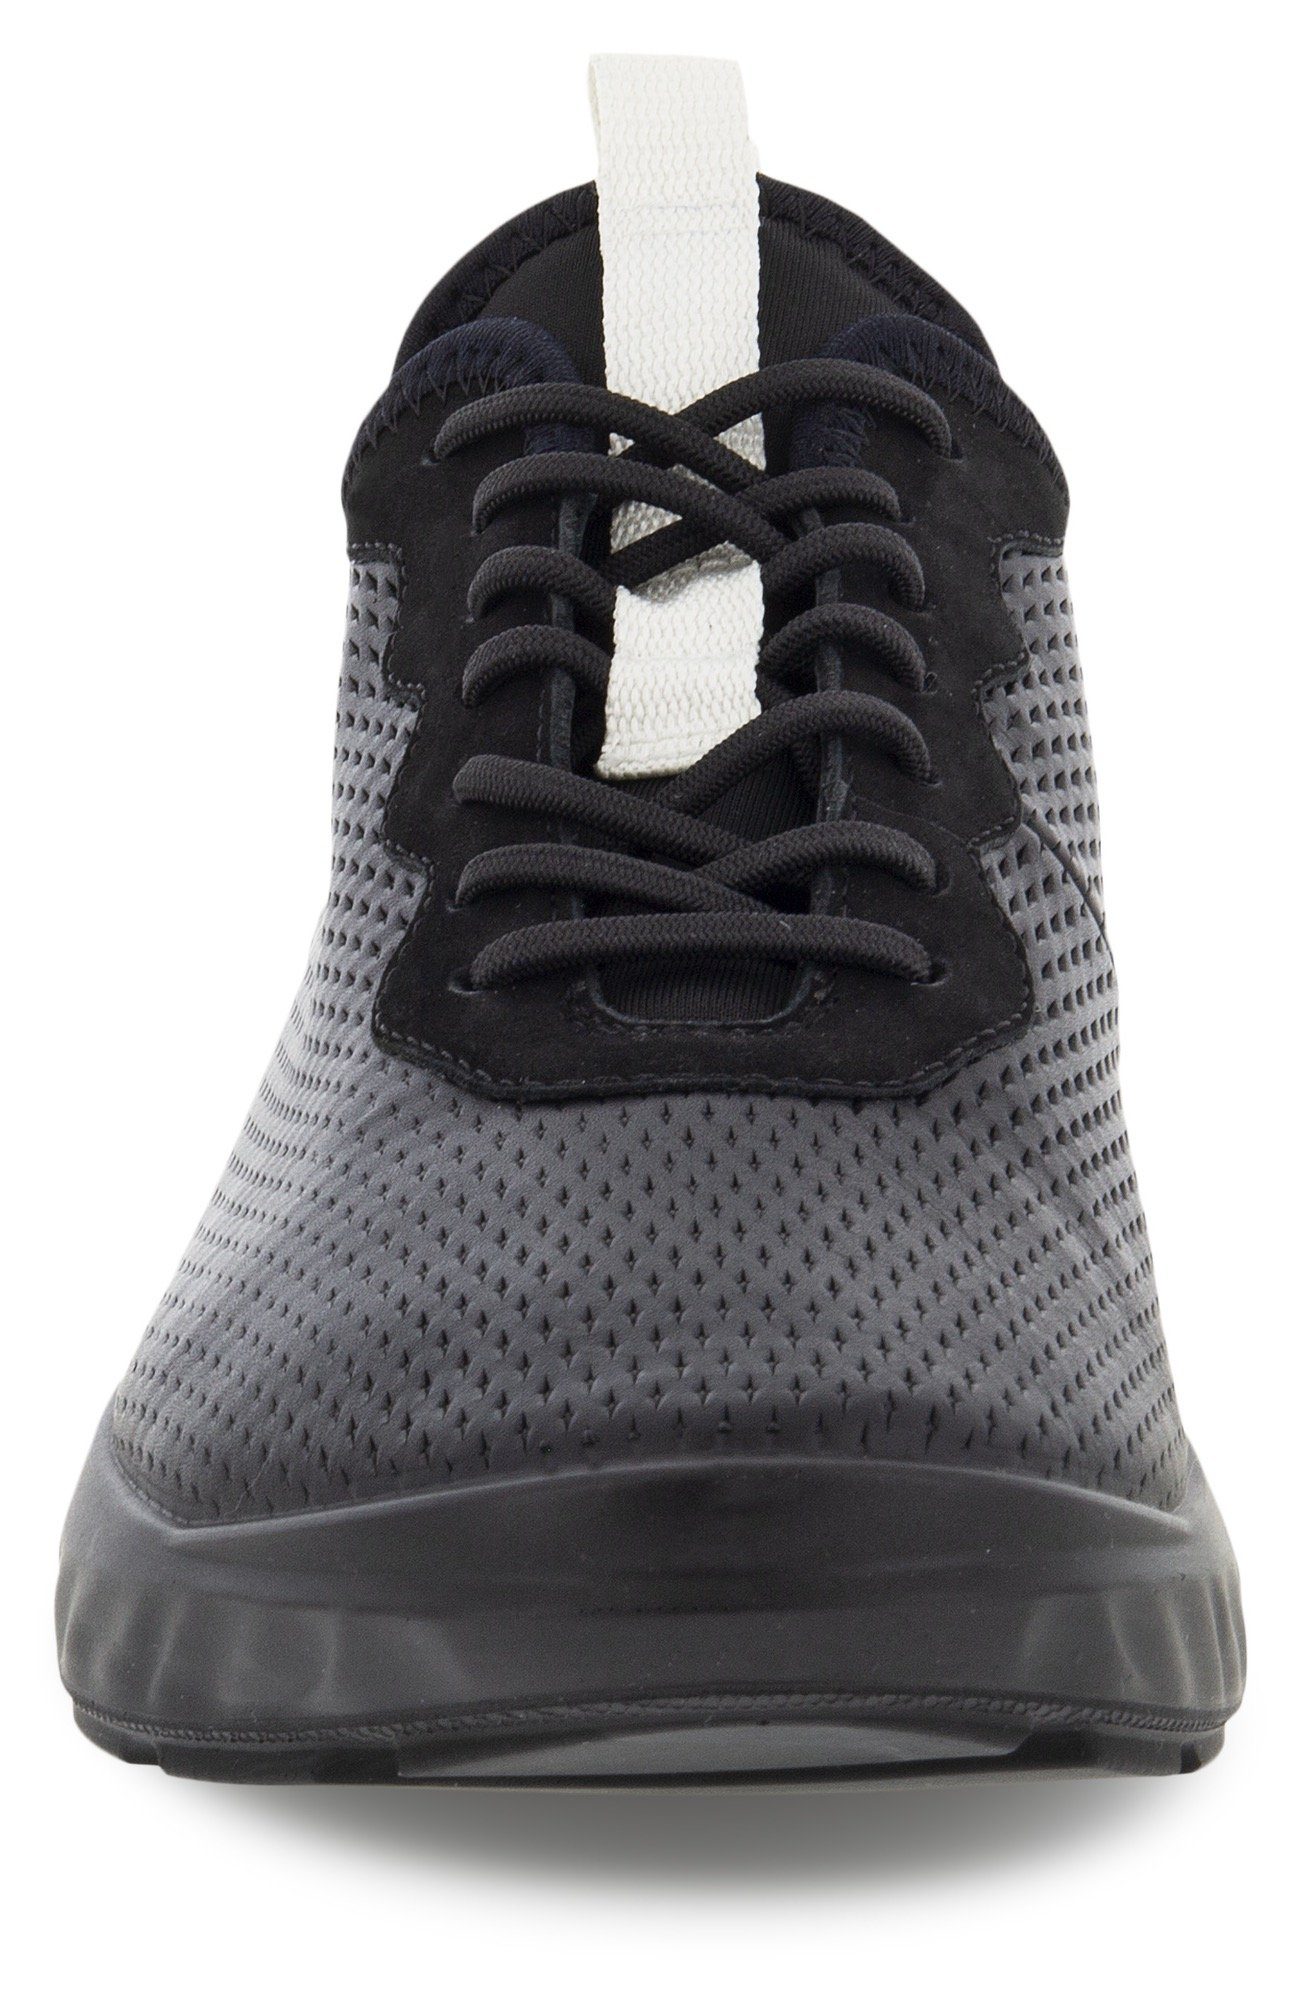 Ecco ATH-1FW Look Sneaker in schwarz weiß sportivem